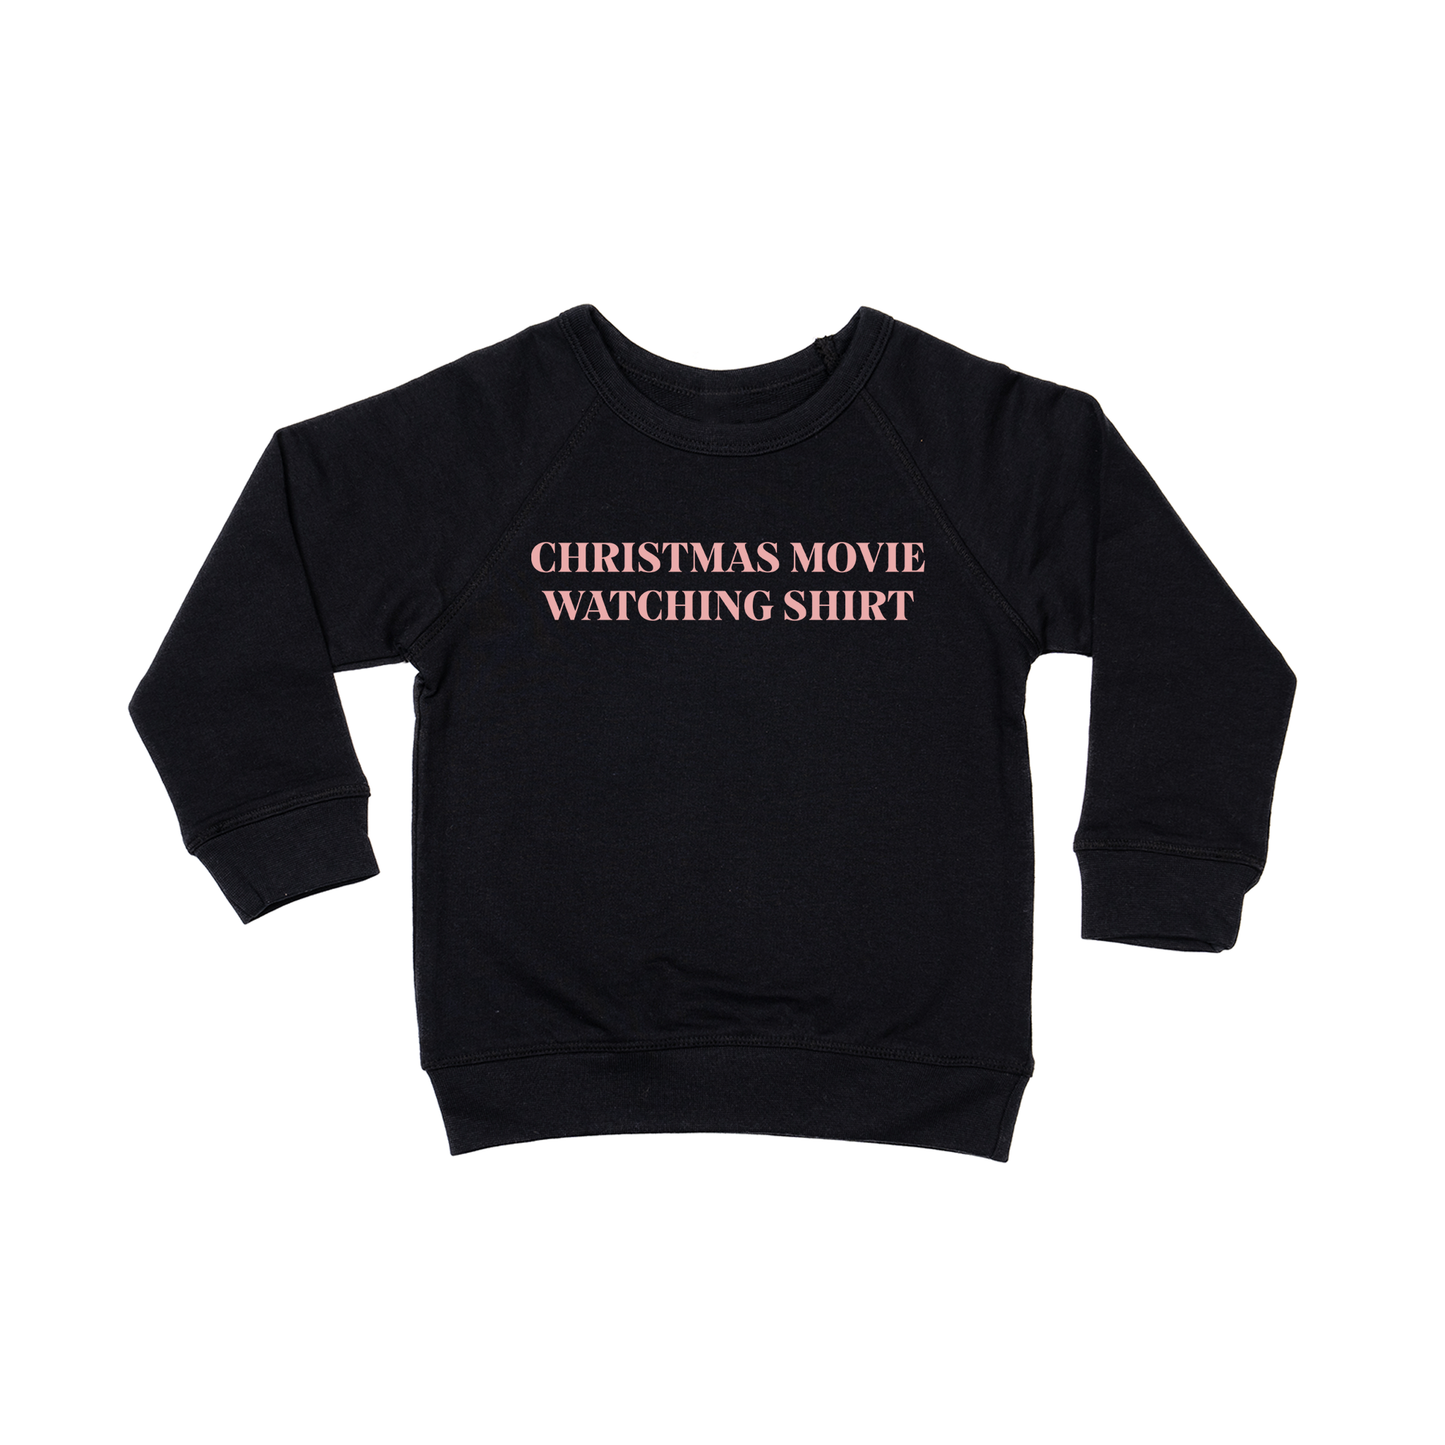 Christmas Movie Watching Shirt (Pink) - Kids Sweatshirt (Black)